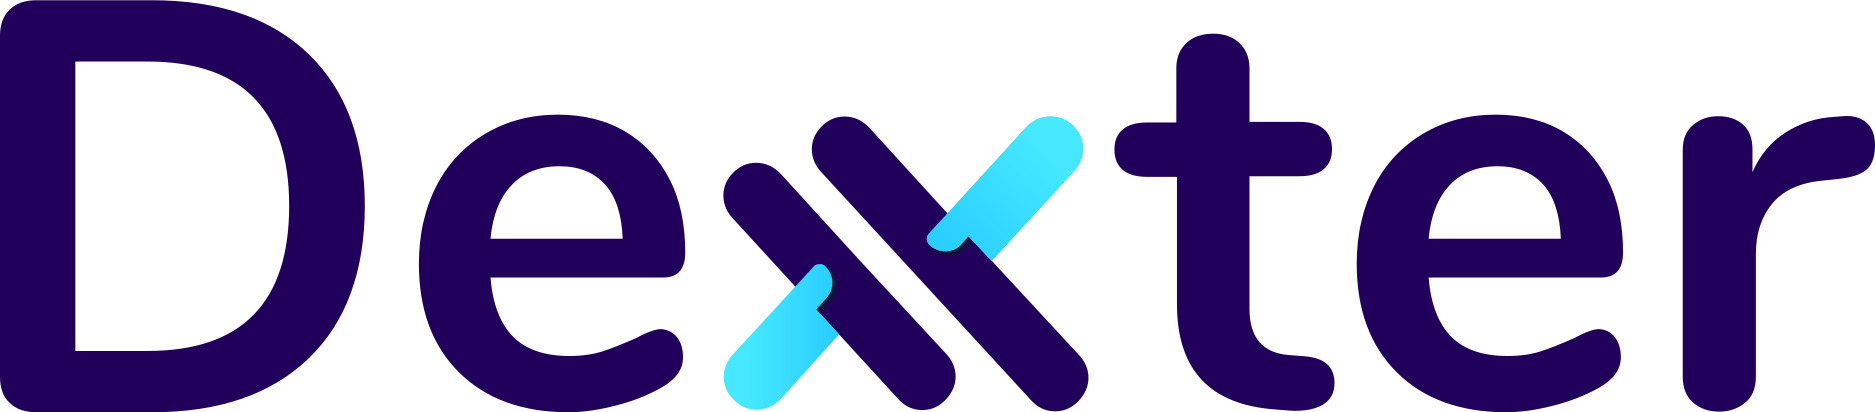 Dexxter Logo V1 1